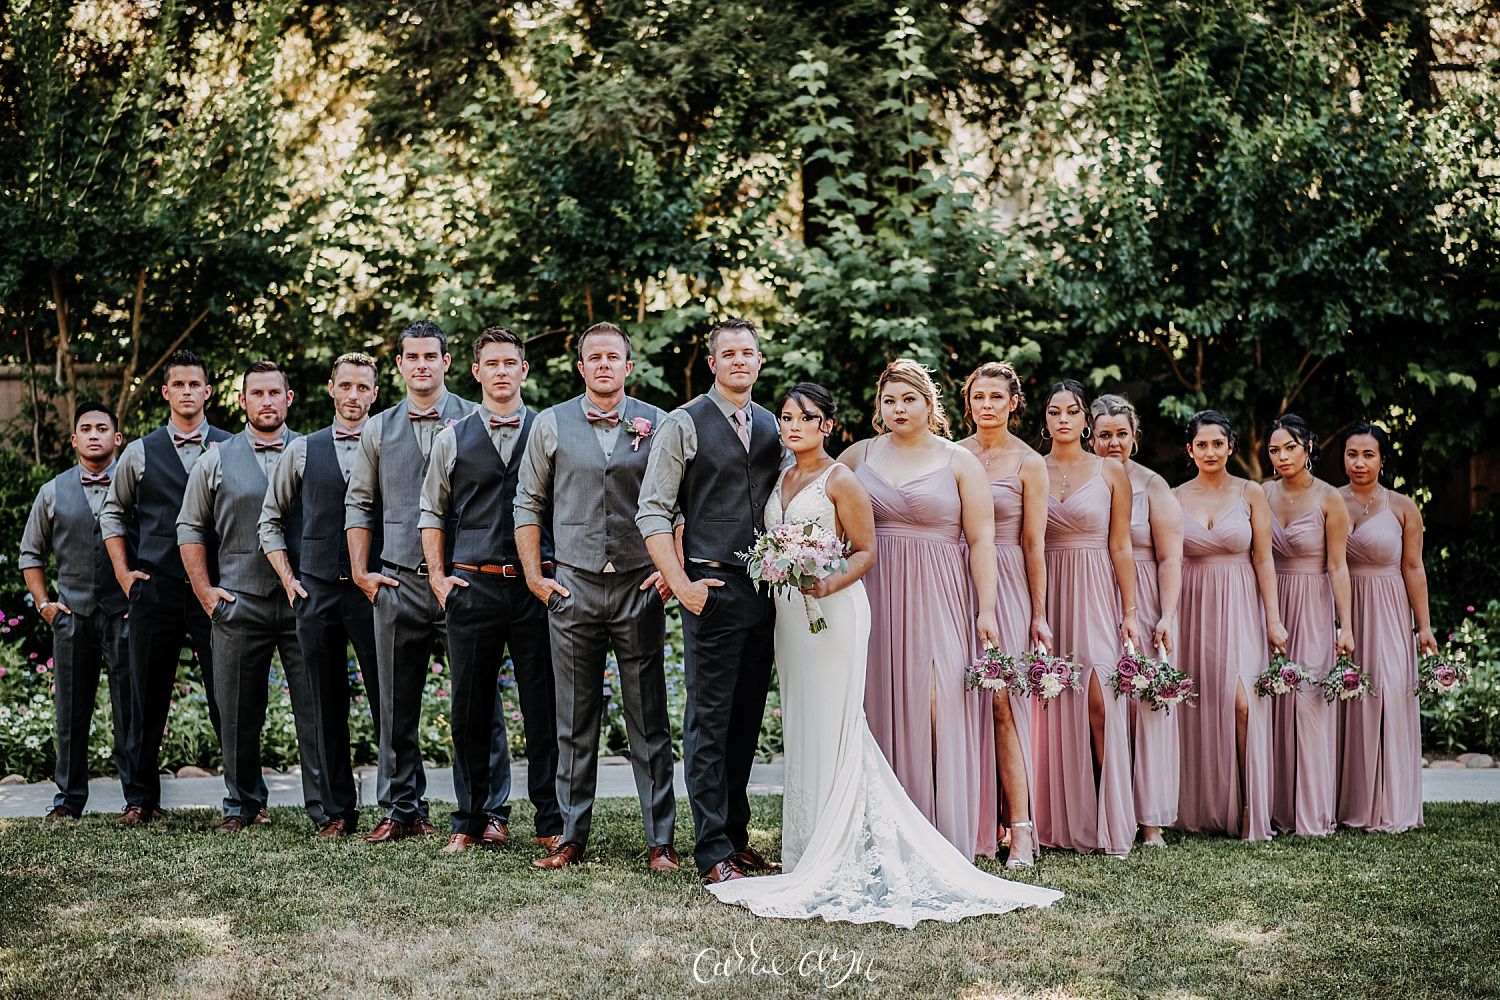 Wine & Roses Wedding Photographer